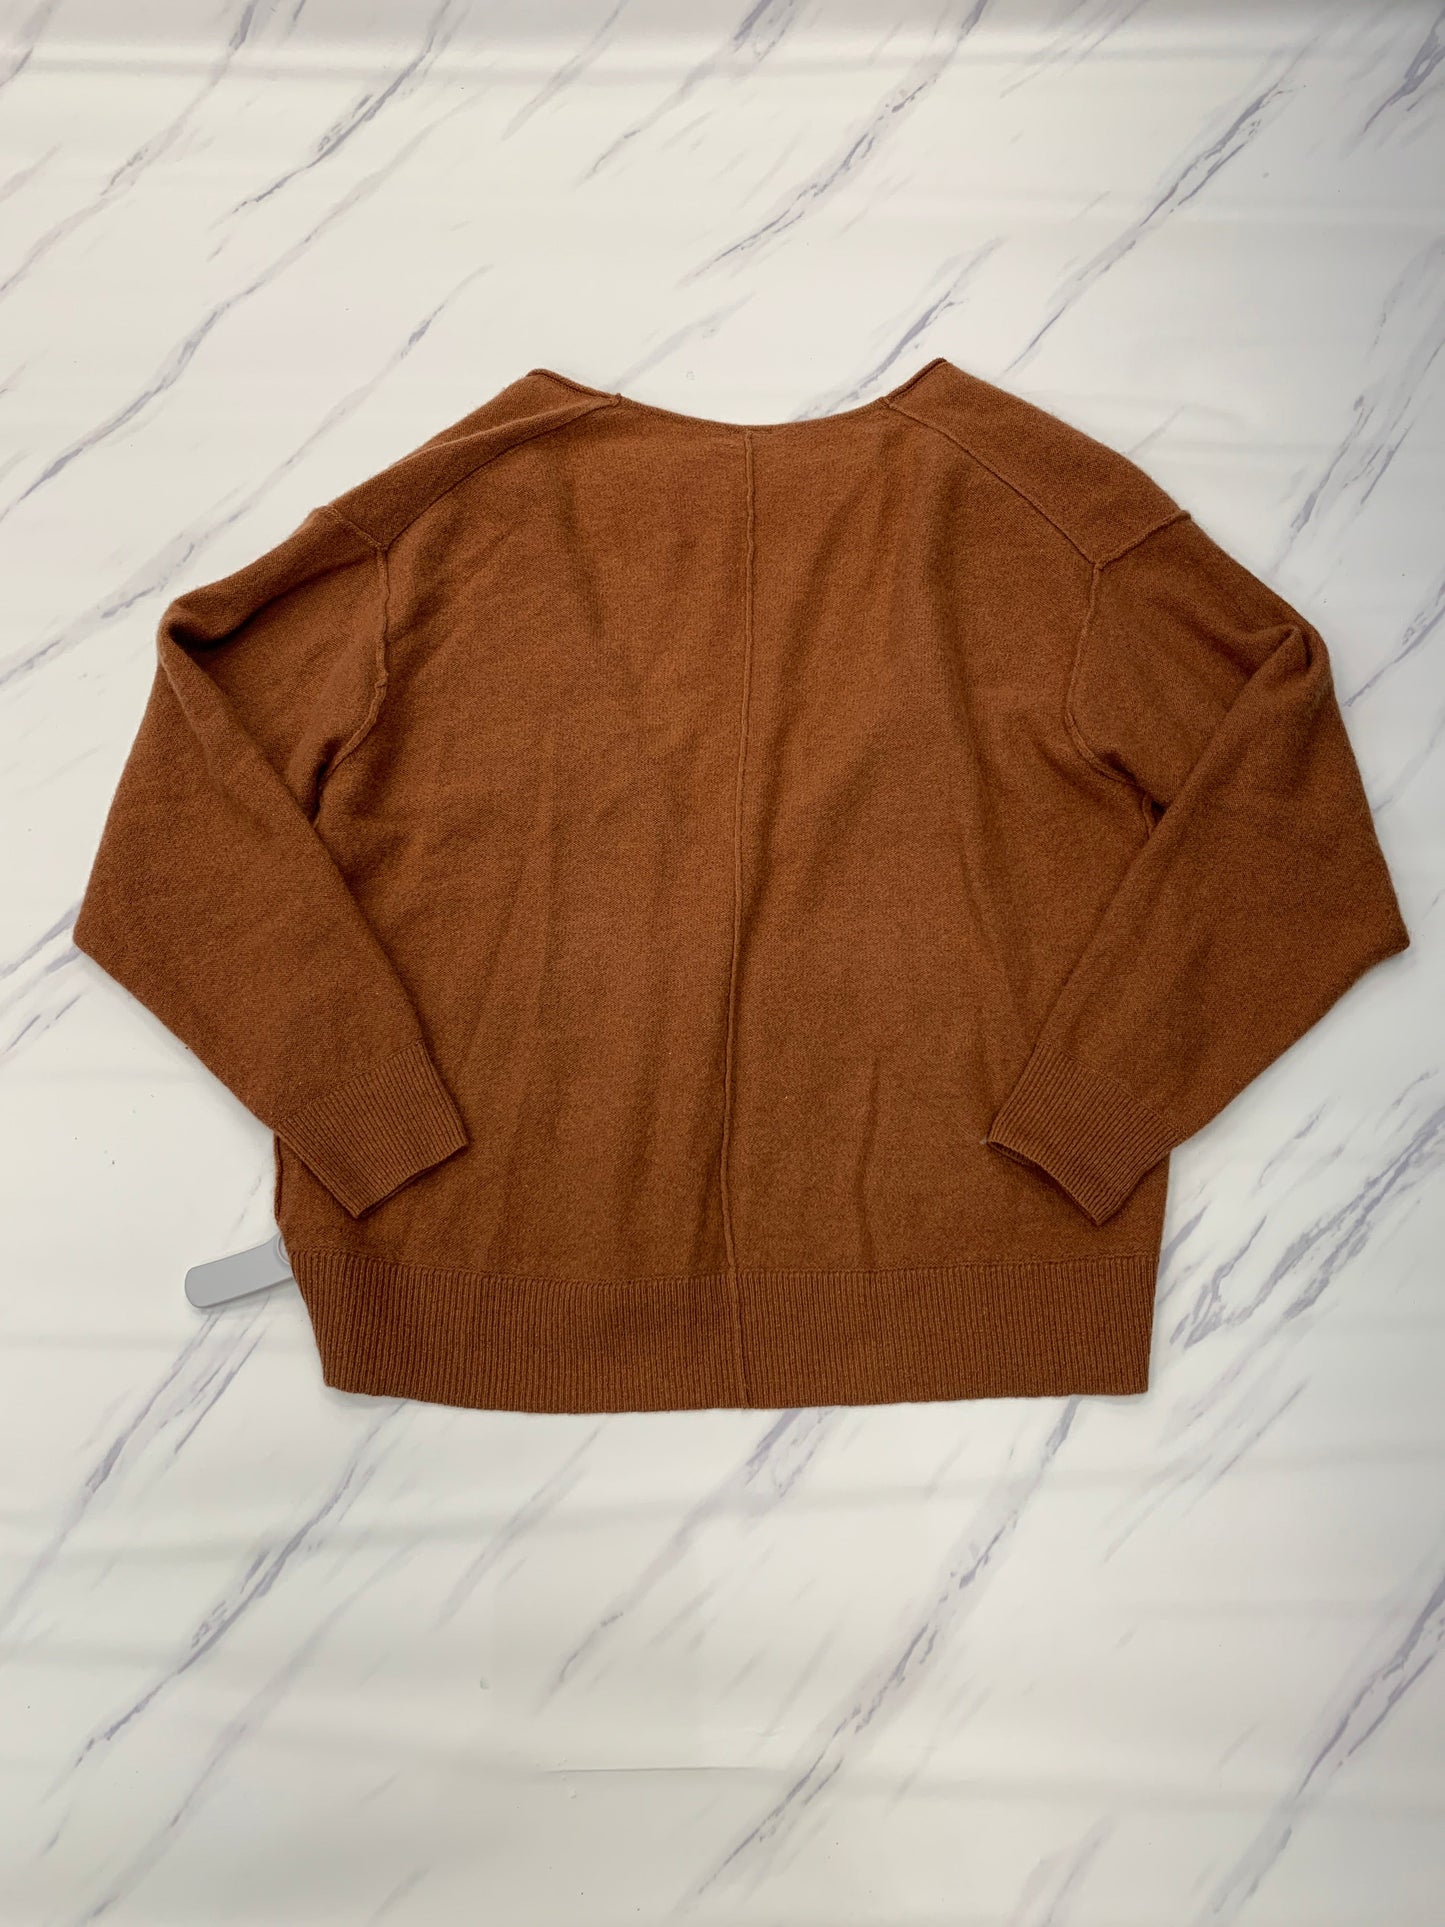 Orange Sweater Cardigan Free People, Size Xs